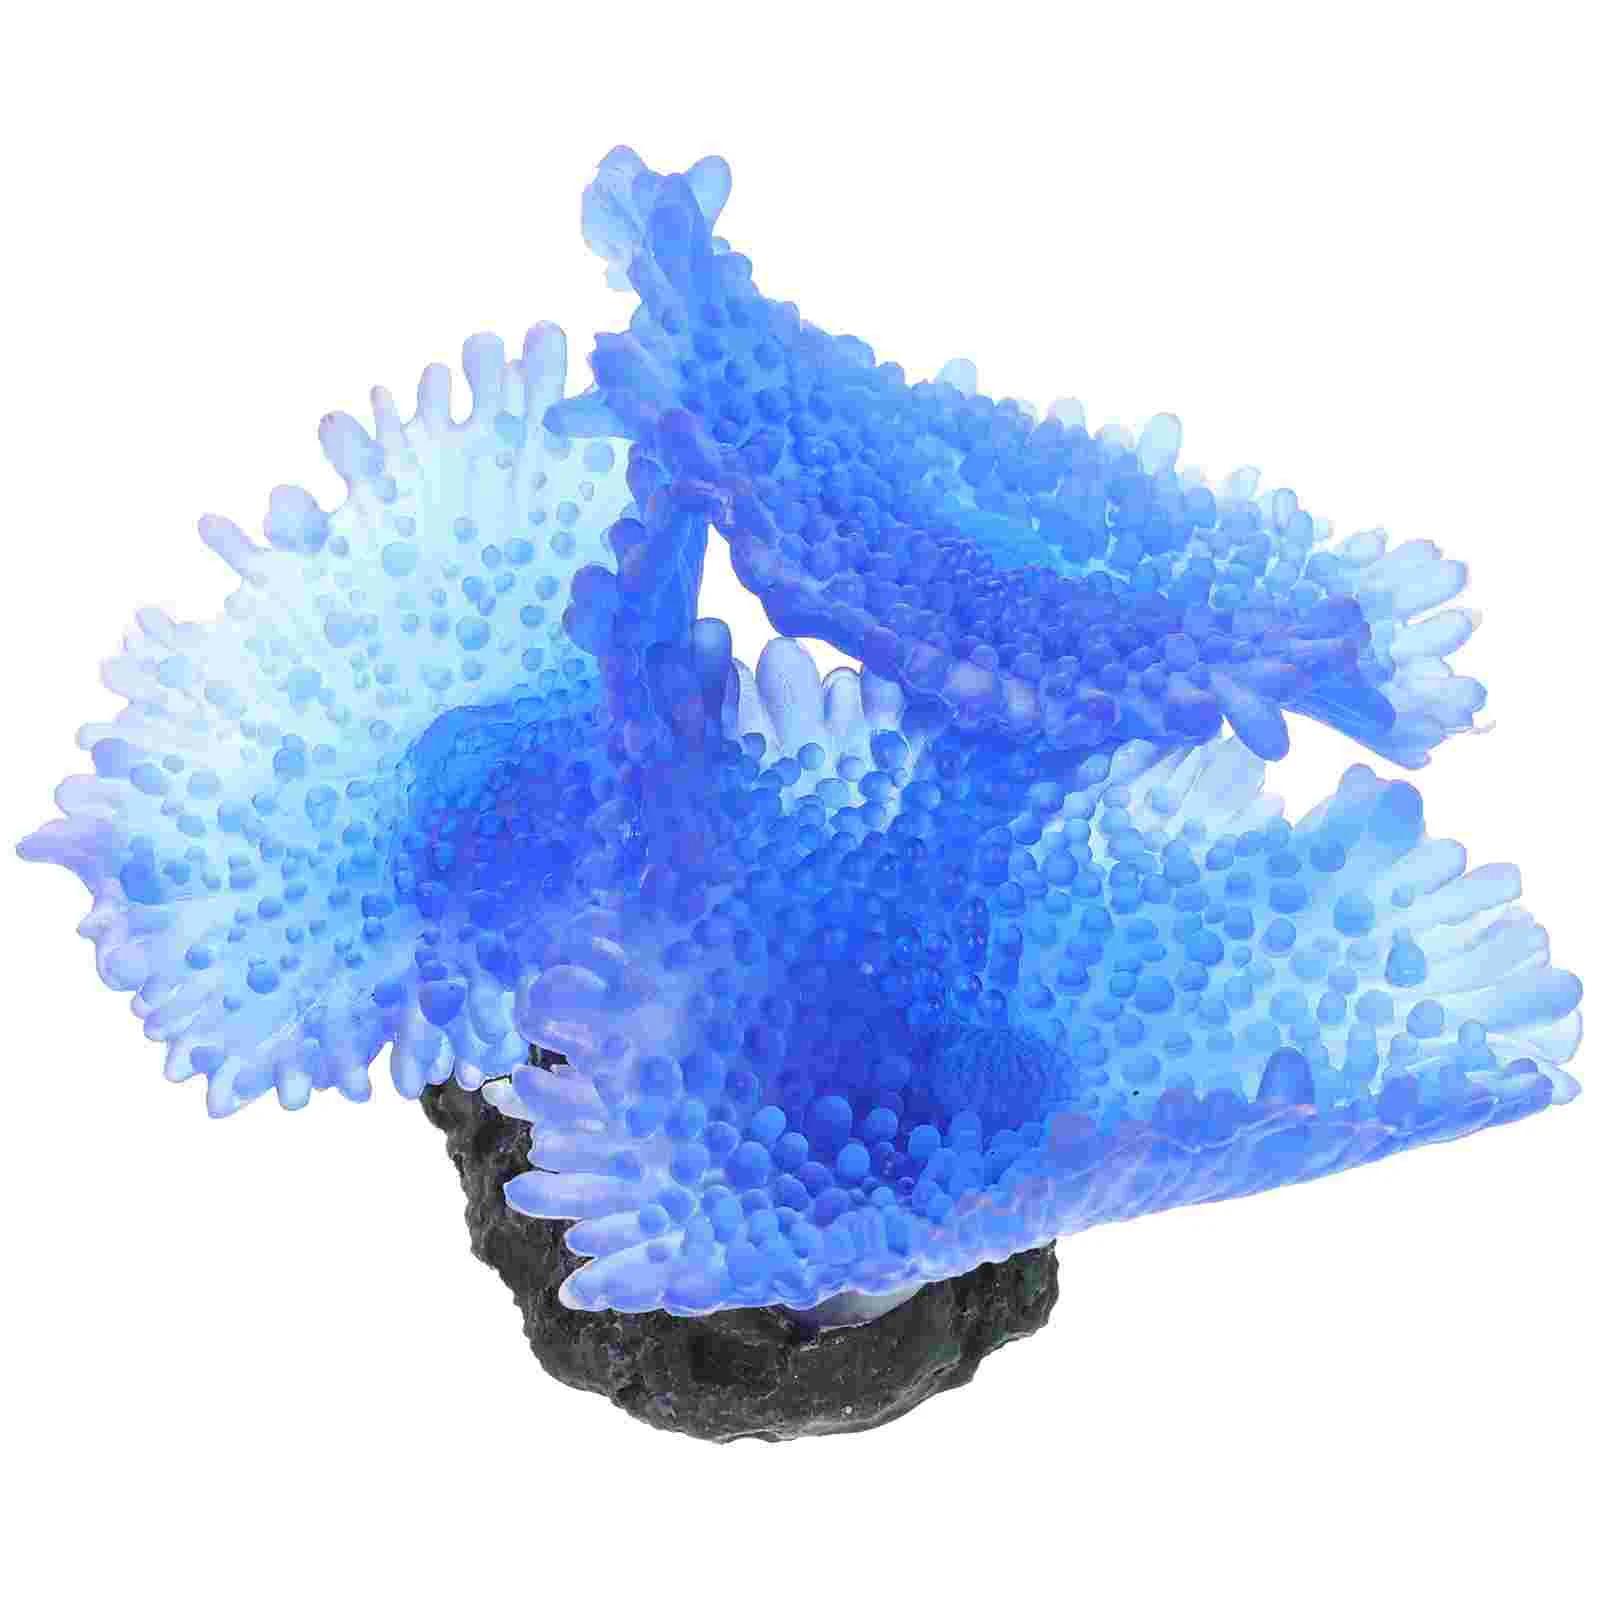 

Aquarium Landscaping Coral Tabletop Decor Figurine Fish Tank Sea Pet Silicone Desktop Silica Gel Simulated Sculpture Plants